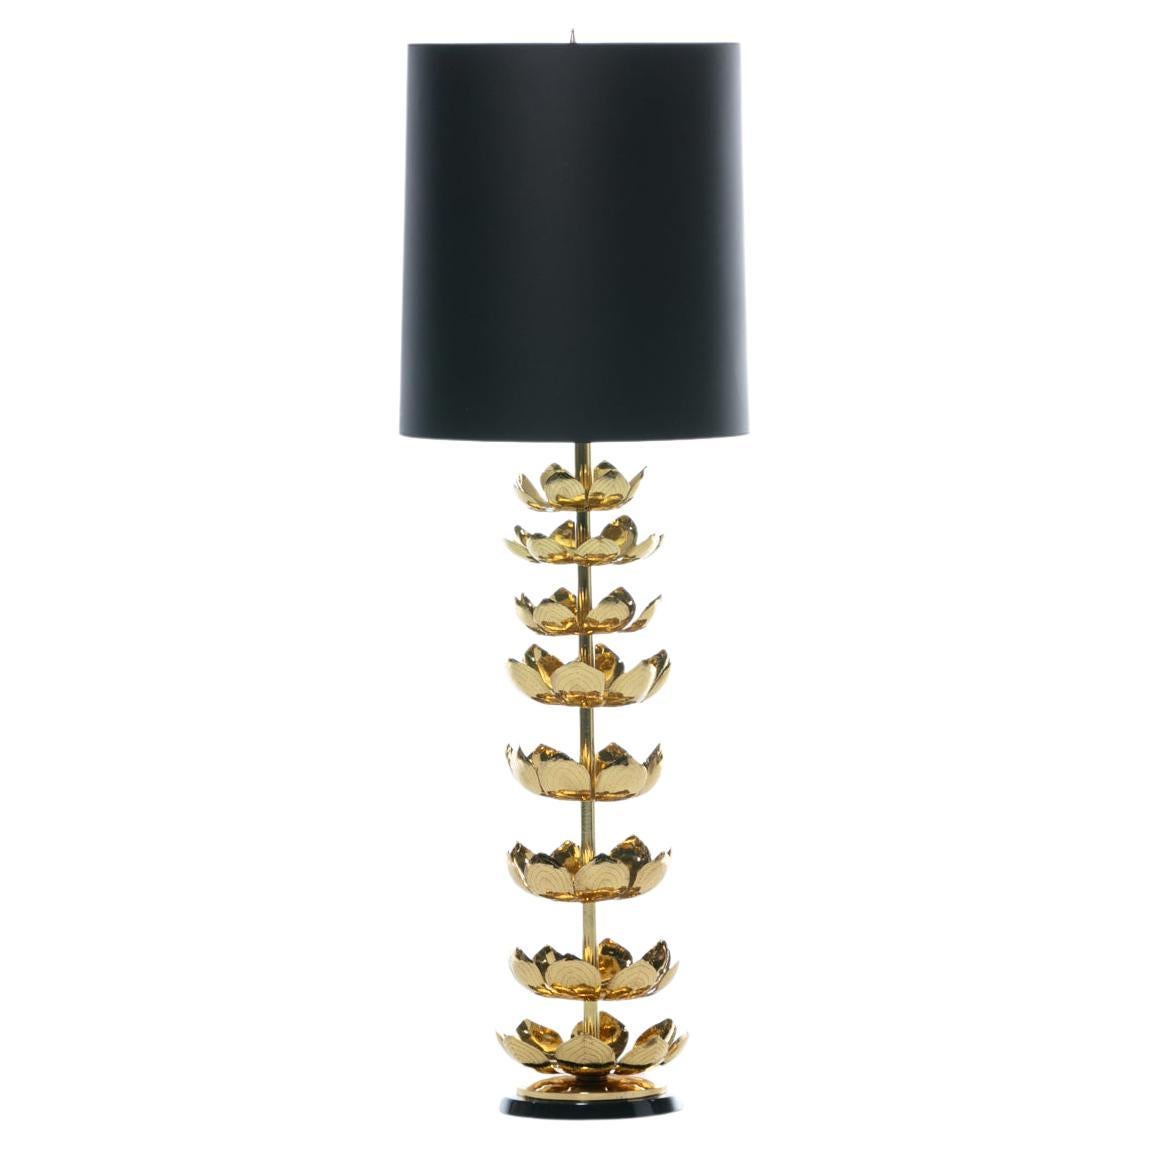 Tall Brass Feldman Lighting Lamp with Lotus Flower Layered Detail, c. 1955